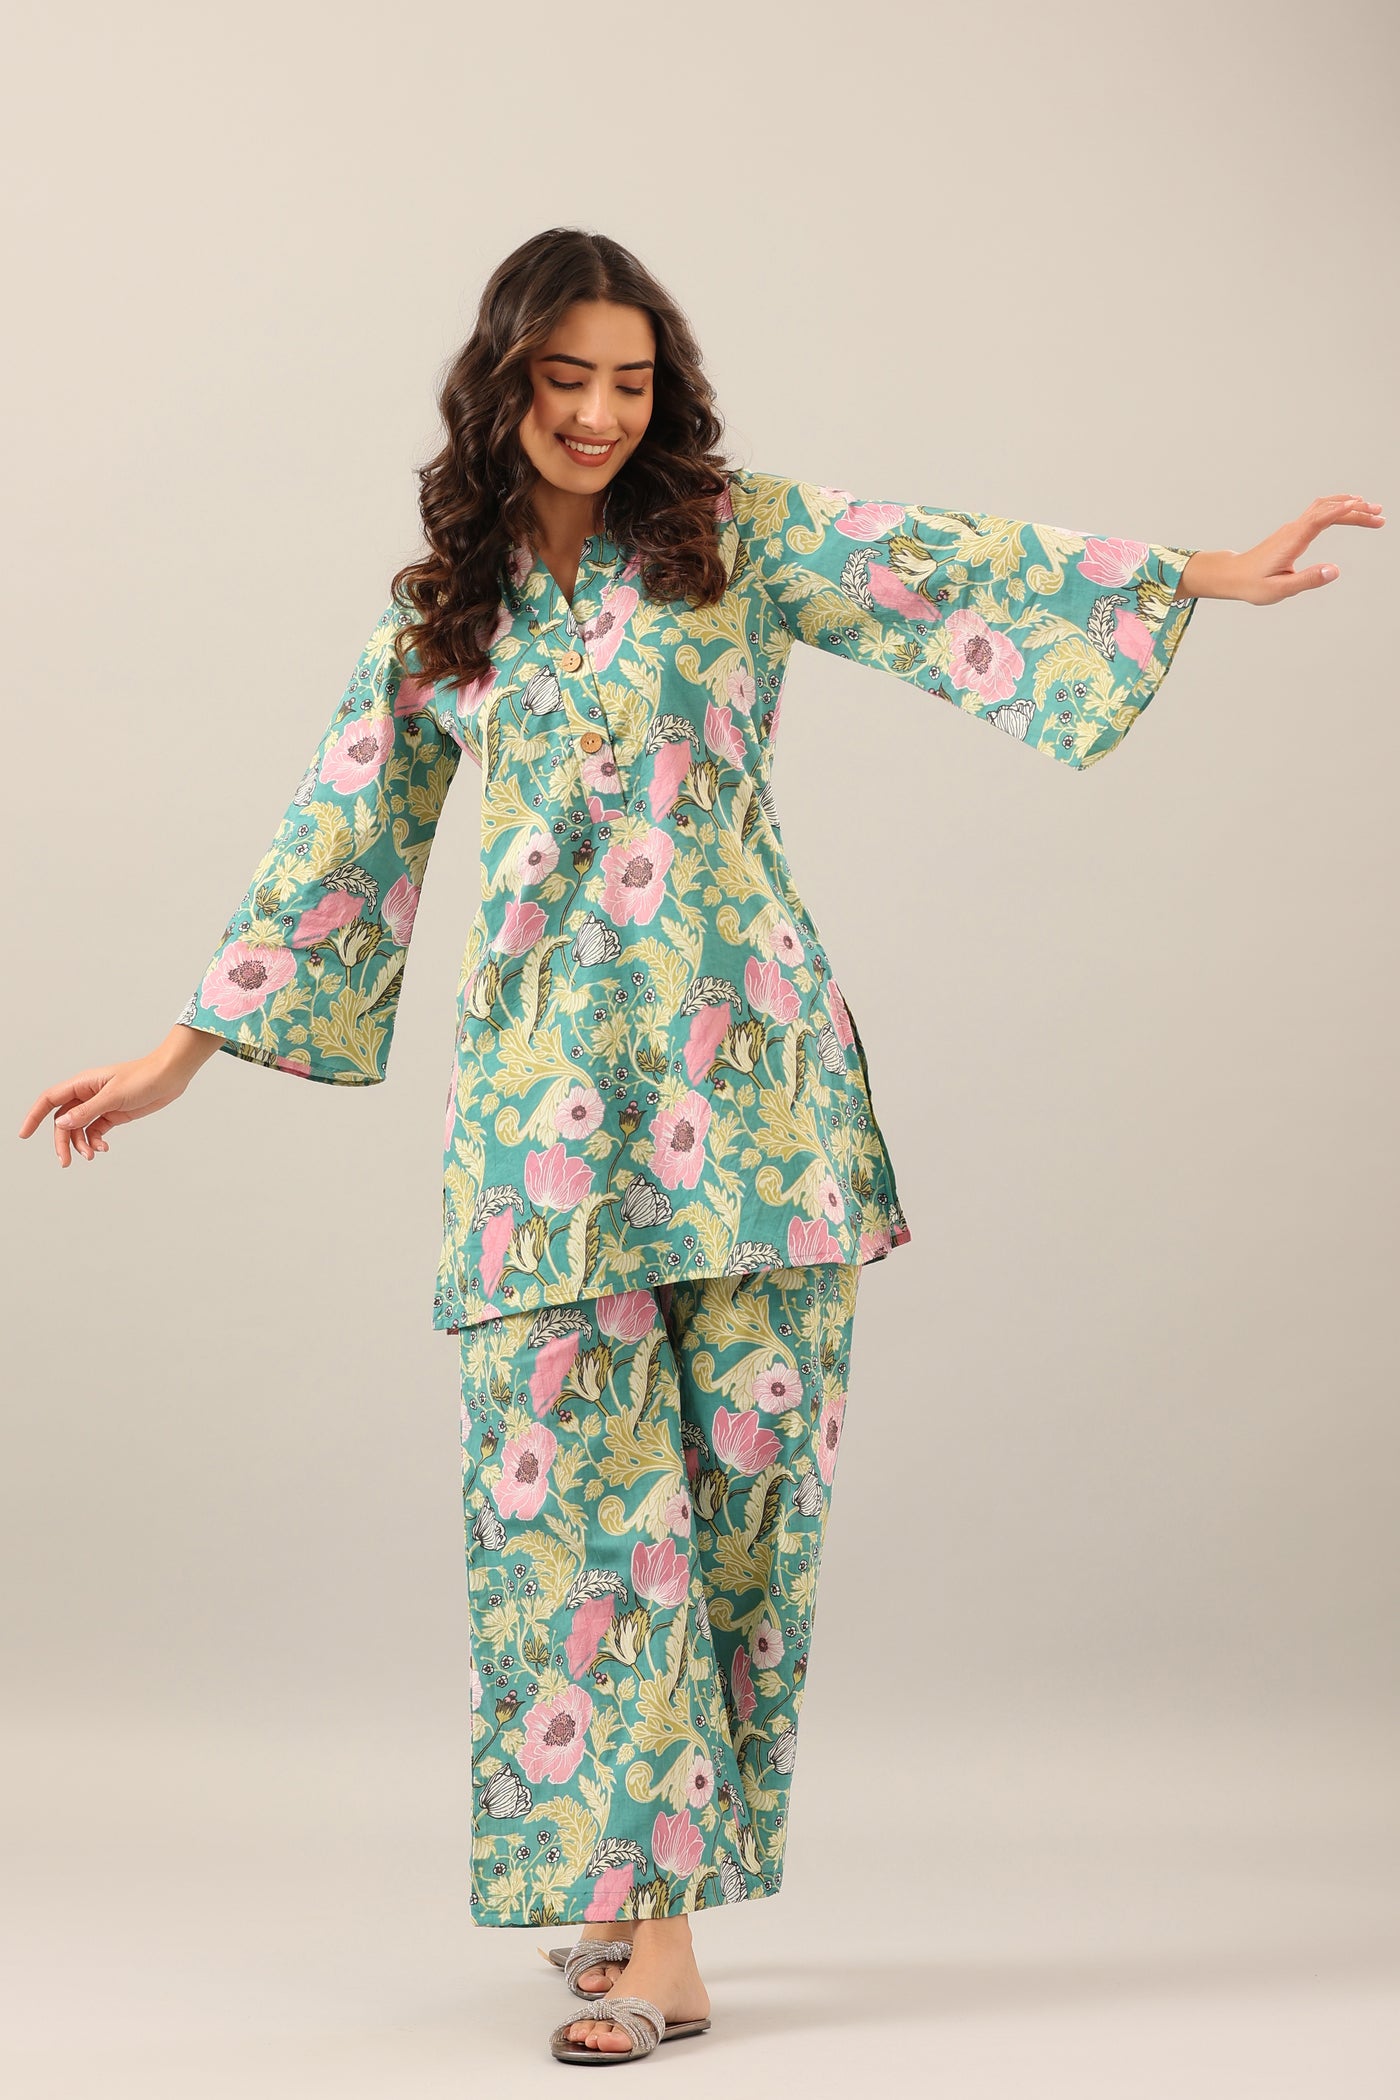 Shop All Women's Pajama Sets | Sleepwear Sets